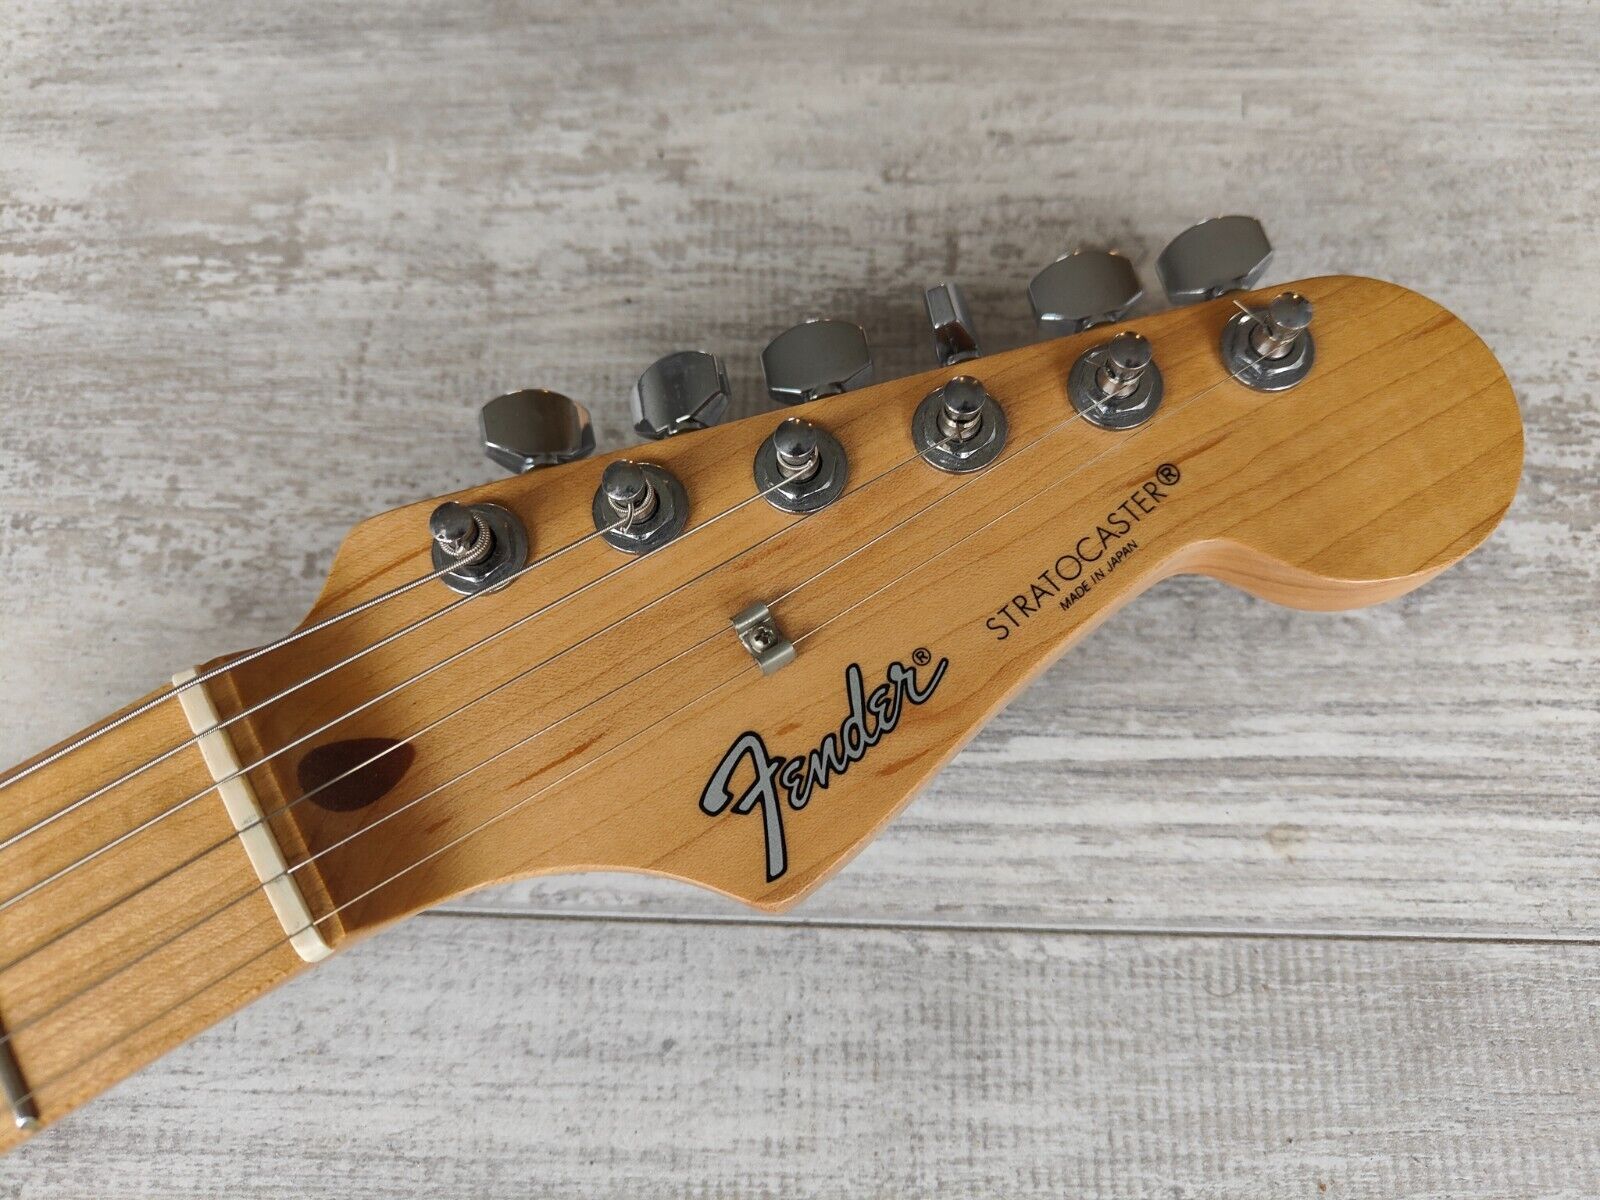 2000 Fender Japan Stratocaster Standard (Capri Orange)